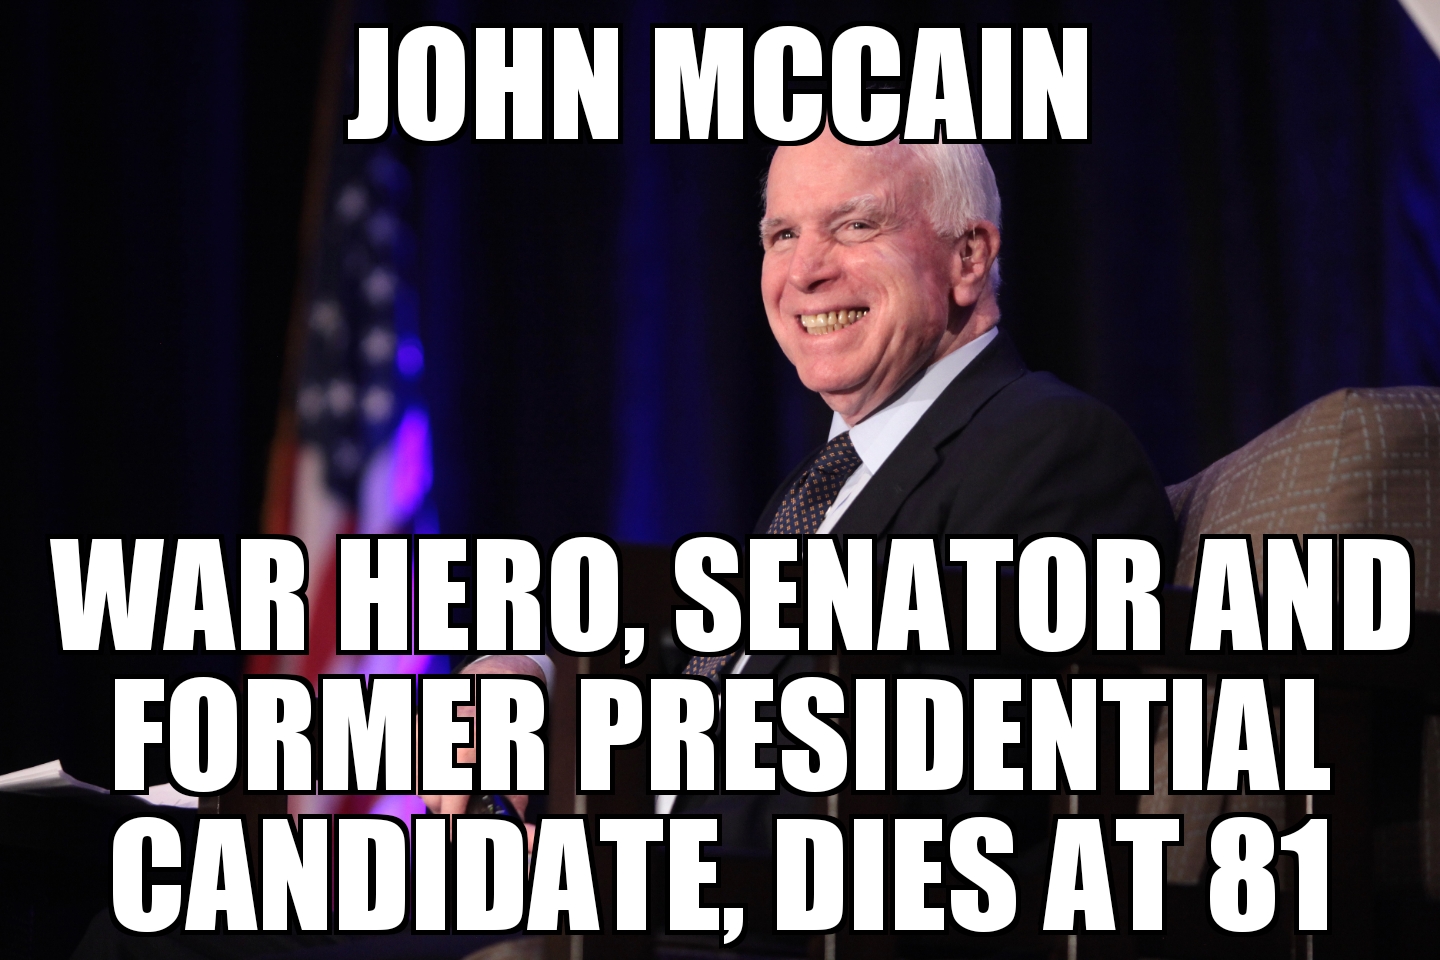 John McCain dies